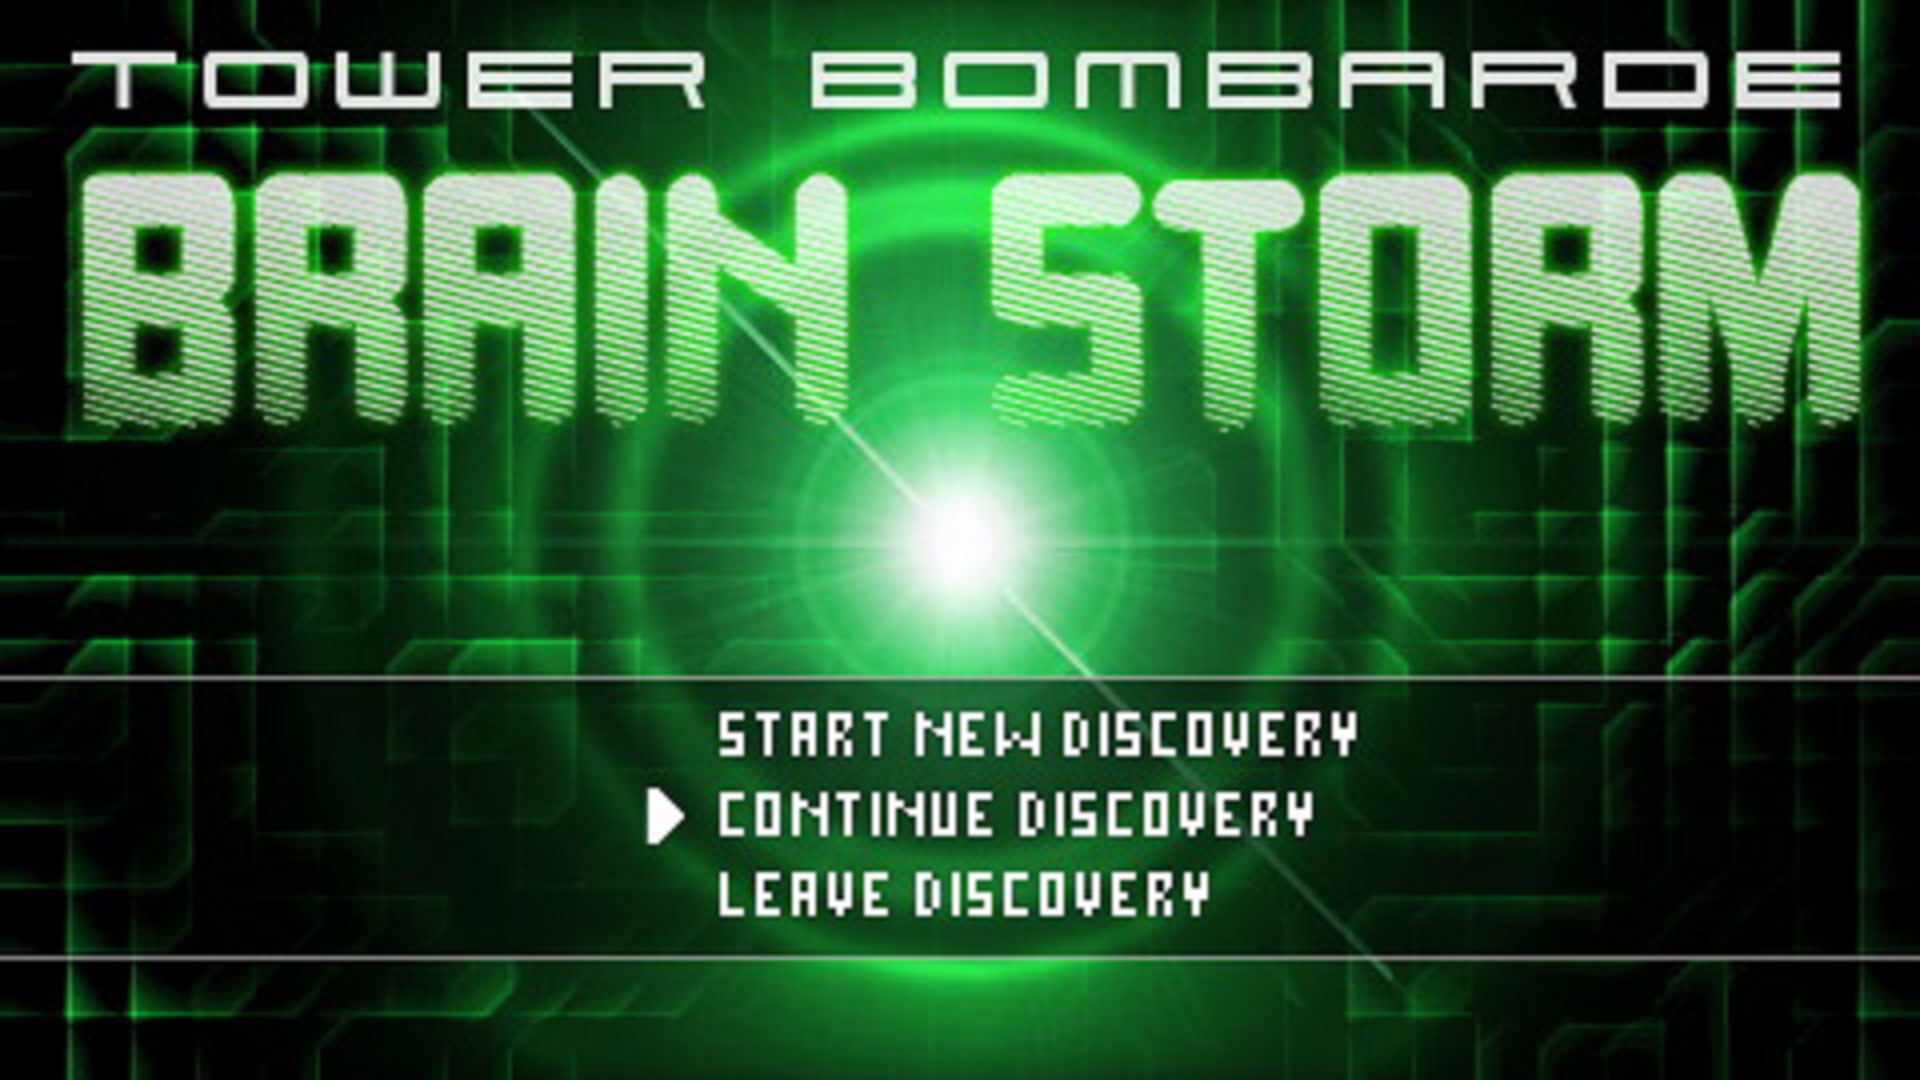 Brain Storm: Tower Bombarde Steam CD Key